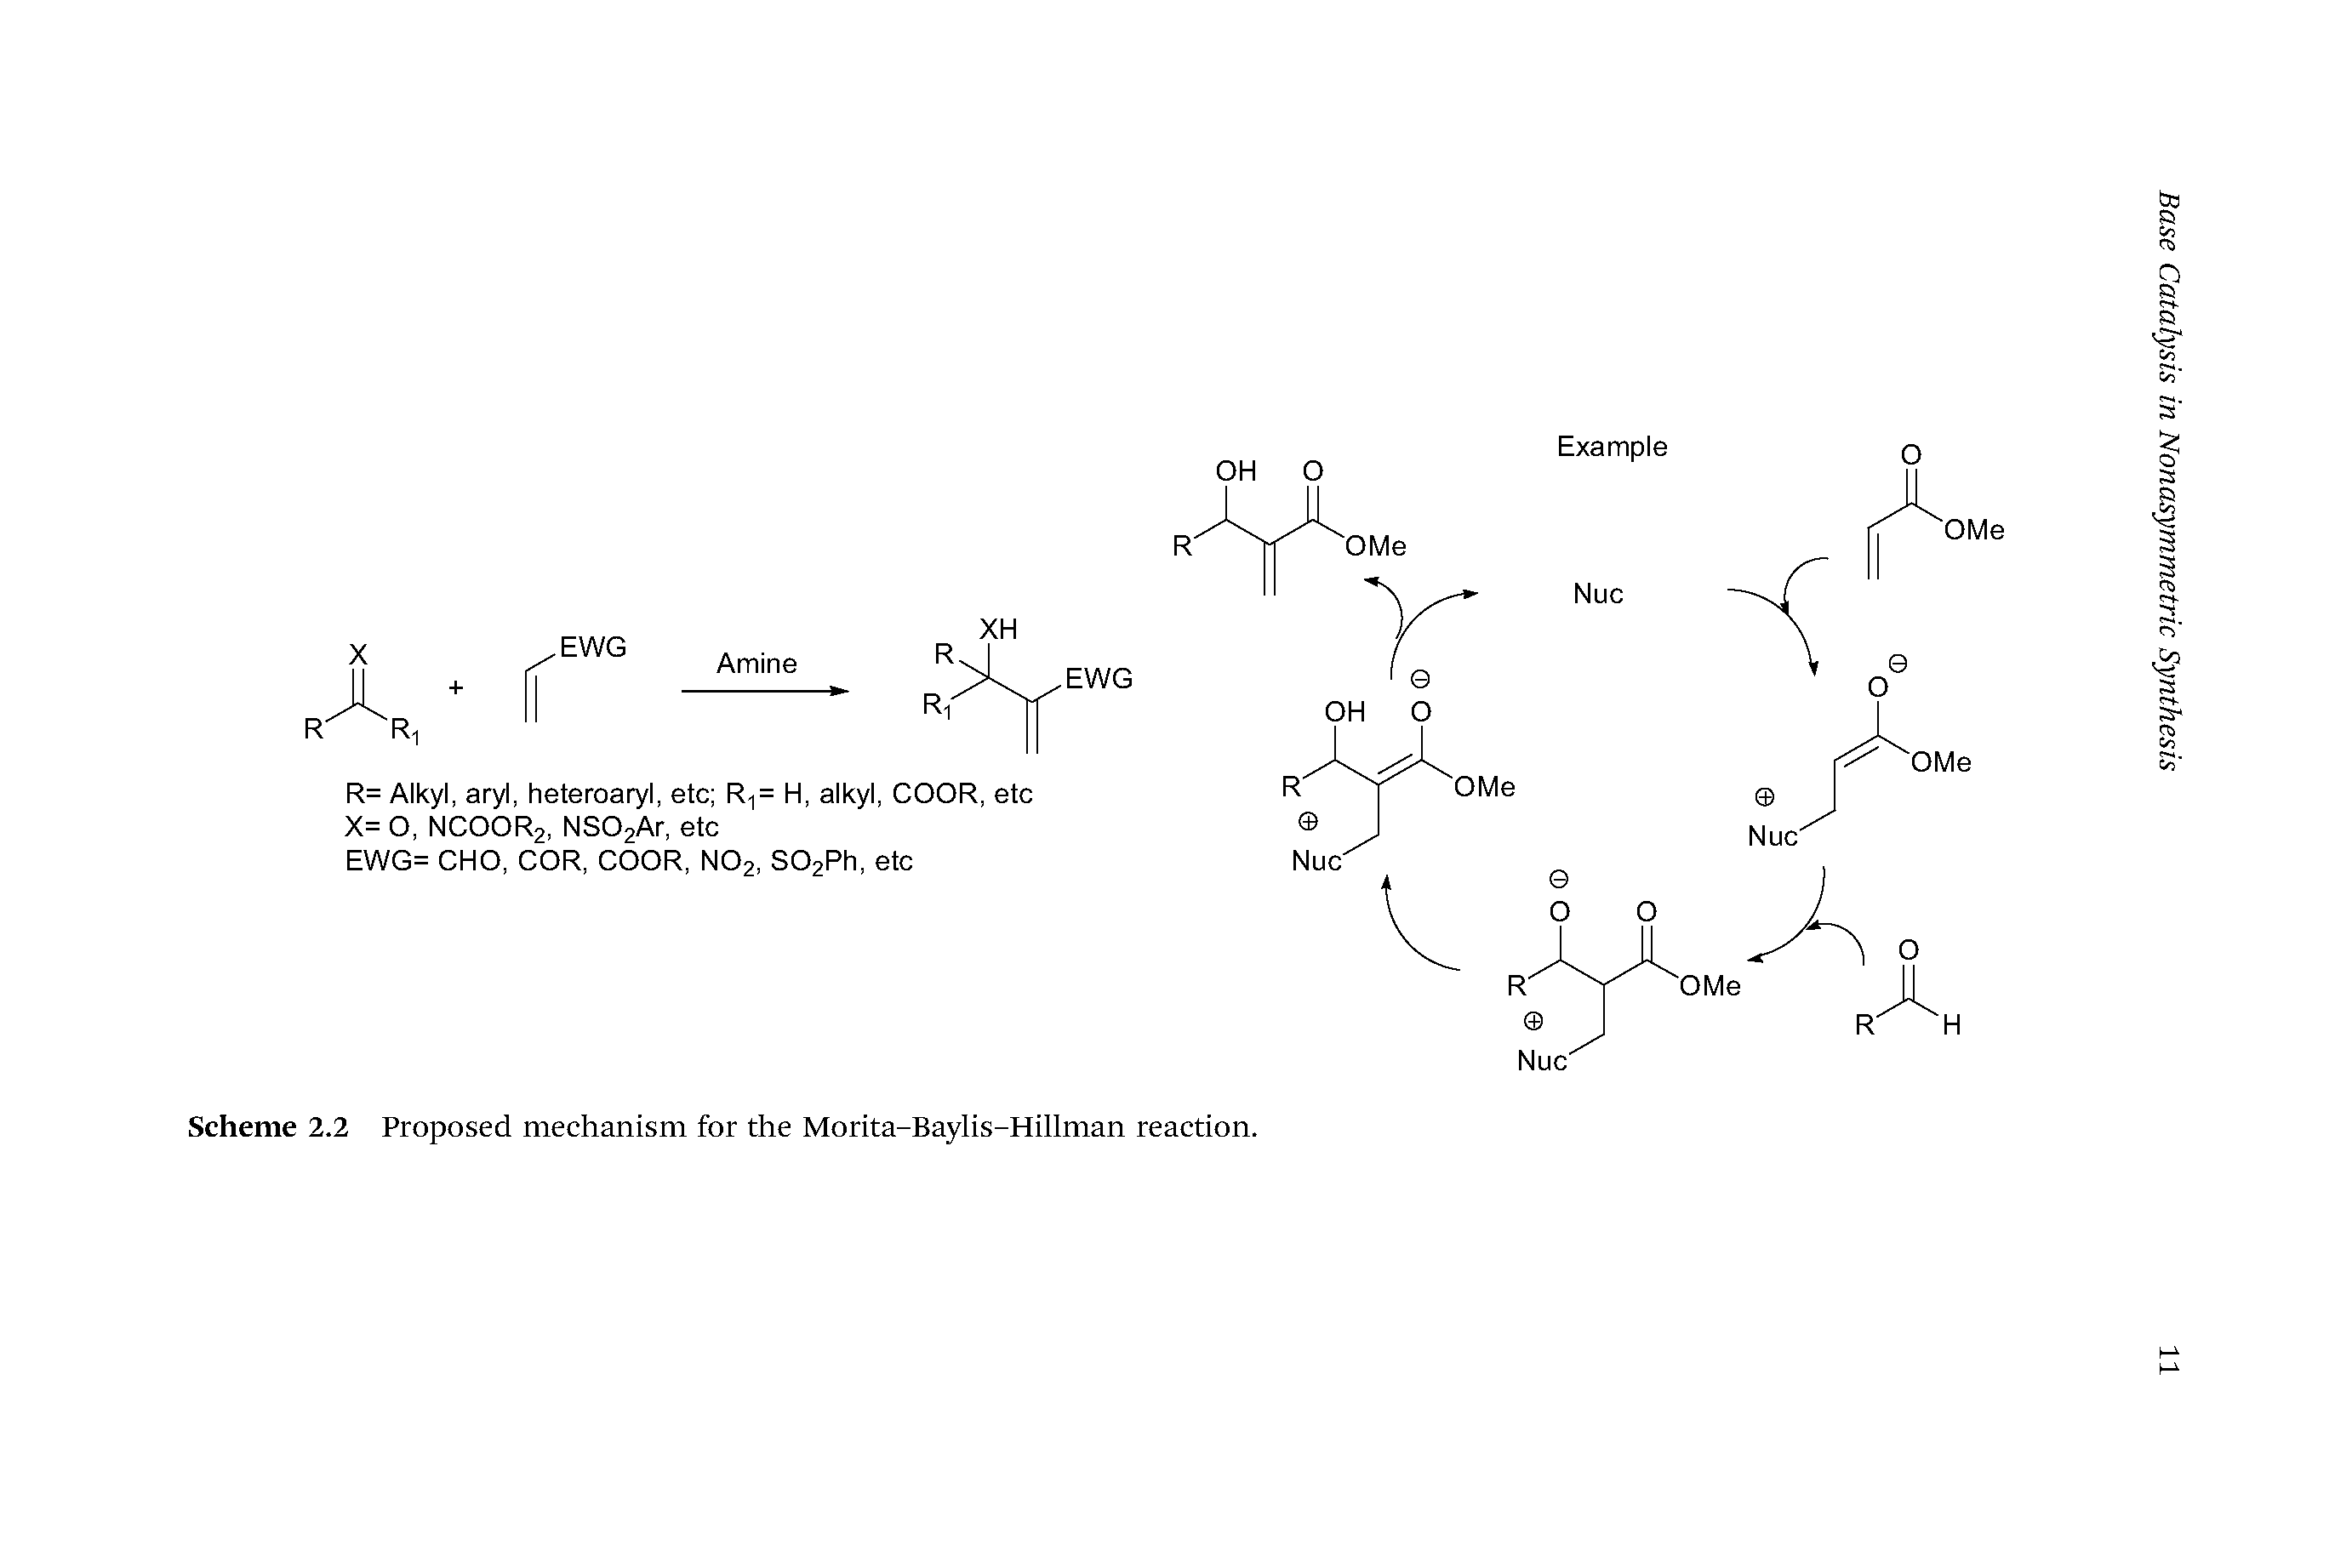 Scheme 2.2 Proposed mechanism for the Morita-Baylis-Hillman reaction.